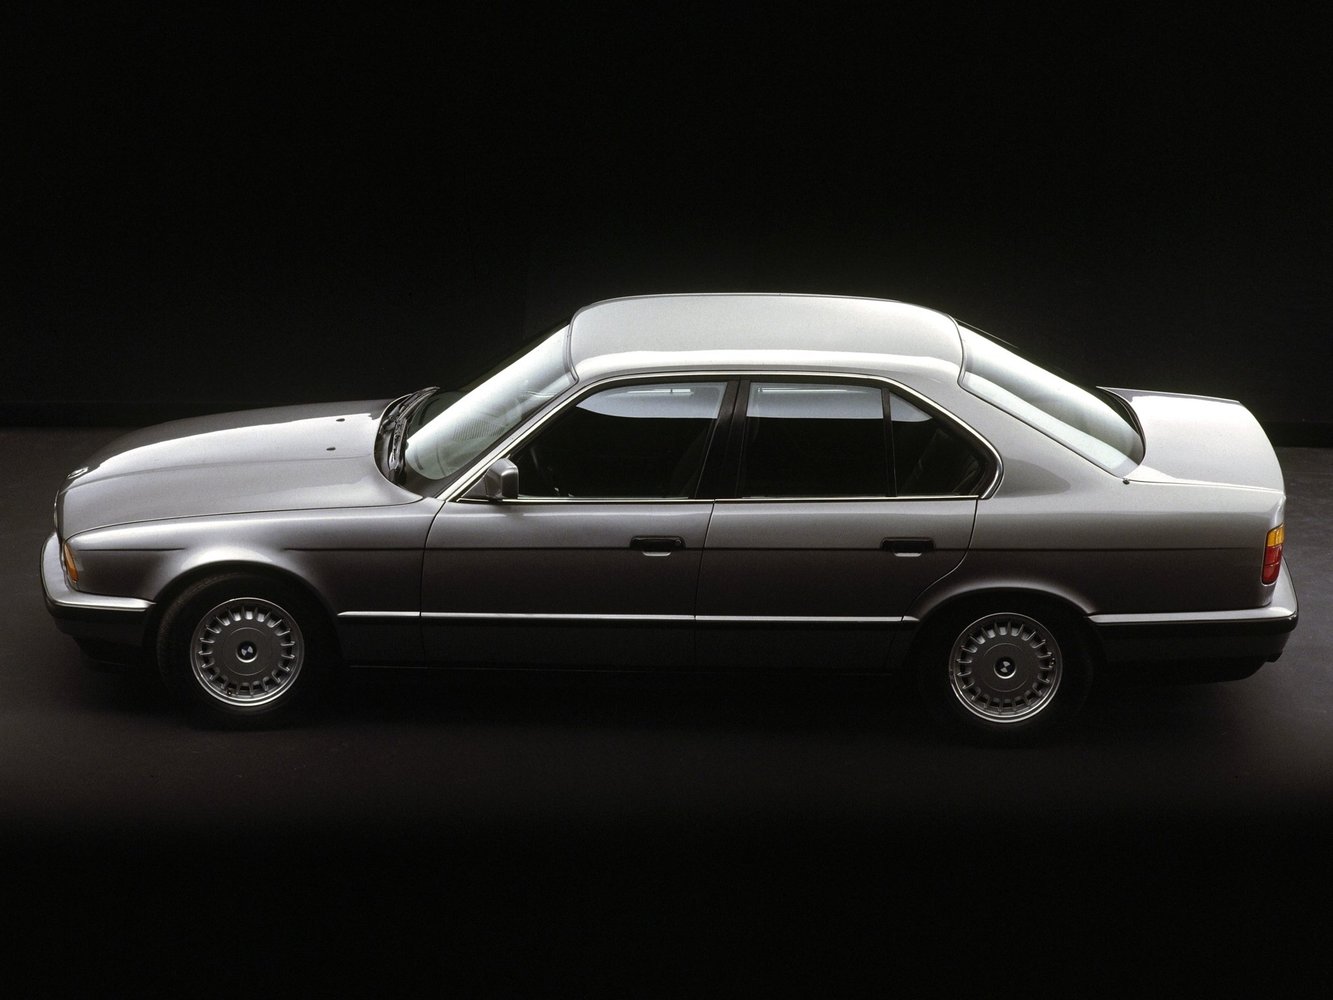 седан BMW 5er 1988 - 1997г выпуска модификация 1.8 AT (115 л.с.)